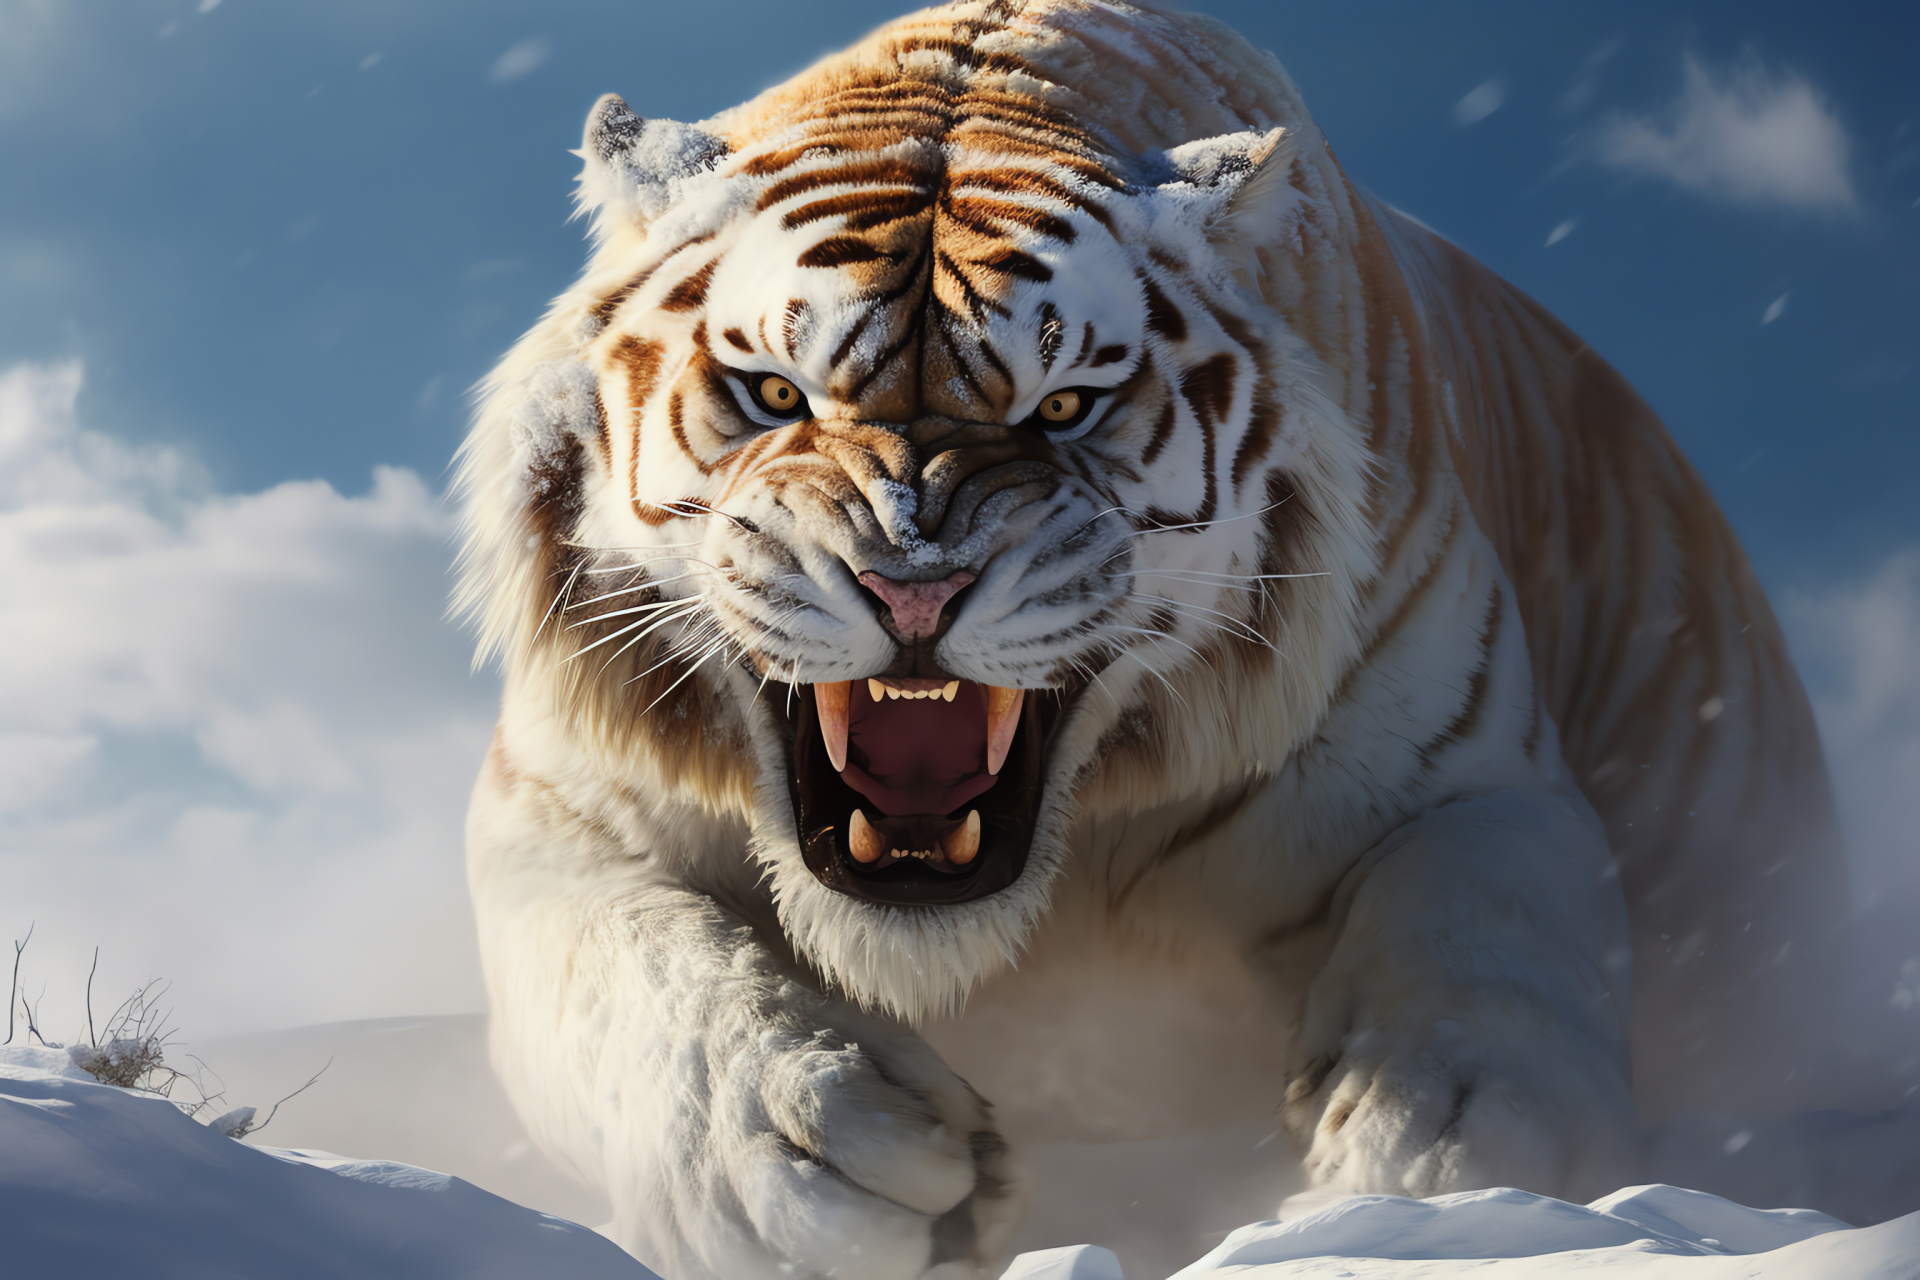 Prehistoric Saber Tooth Tiger, Orange-eyed Tundra predator, Snowy ambiance large cat, Fierce furry ancient tiger, Sabertooth survival, HD Desktop Wallpaper